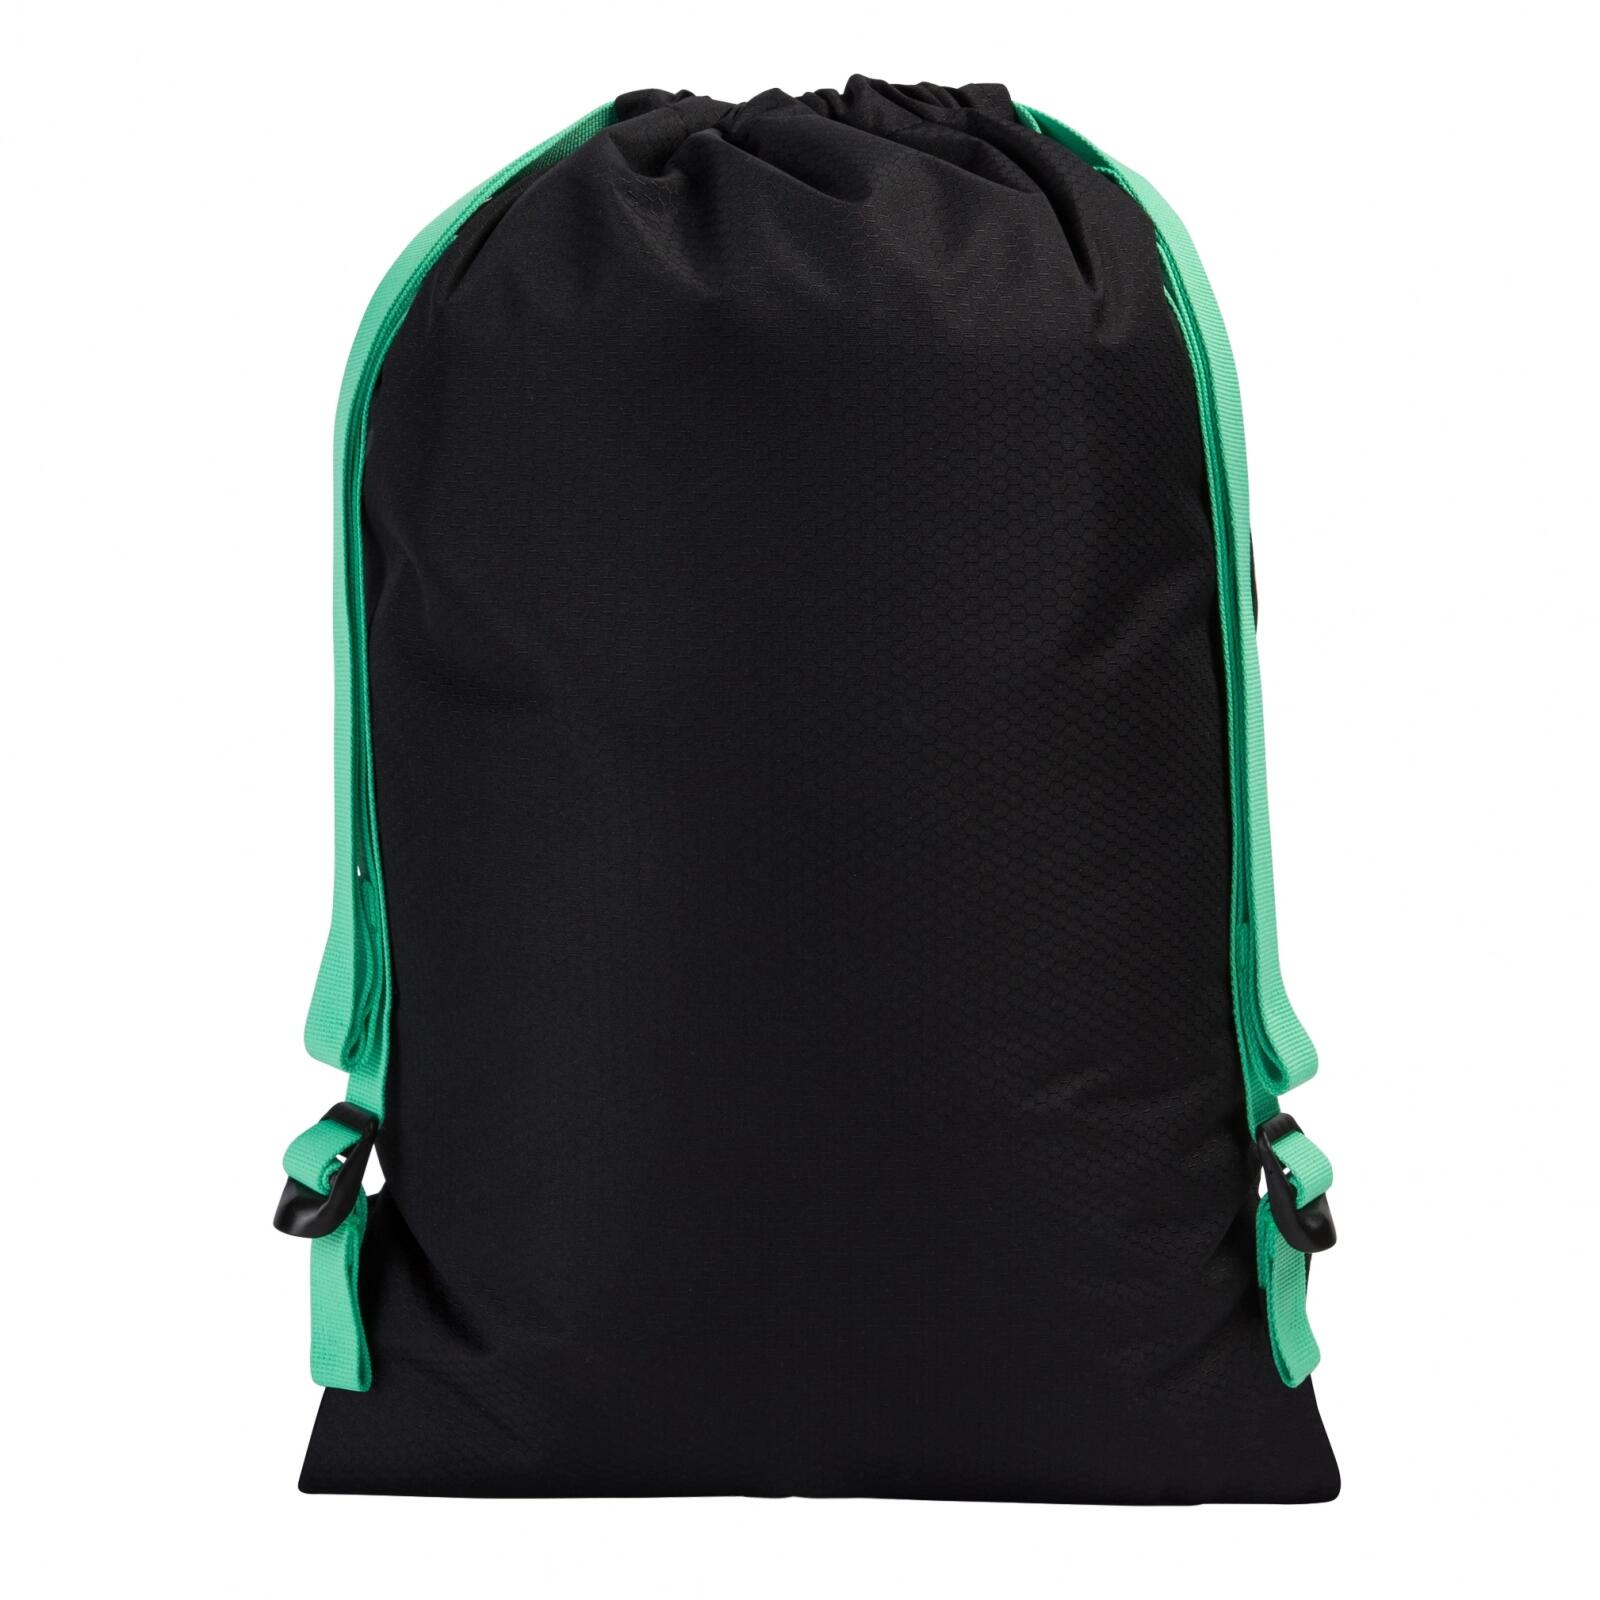 Speedo Pool Bag - Black / Green 2/4